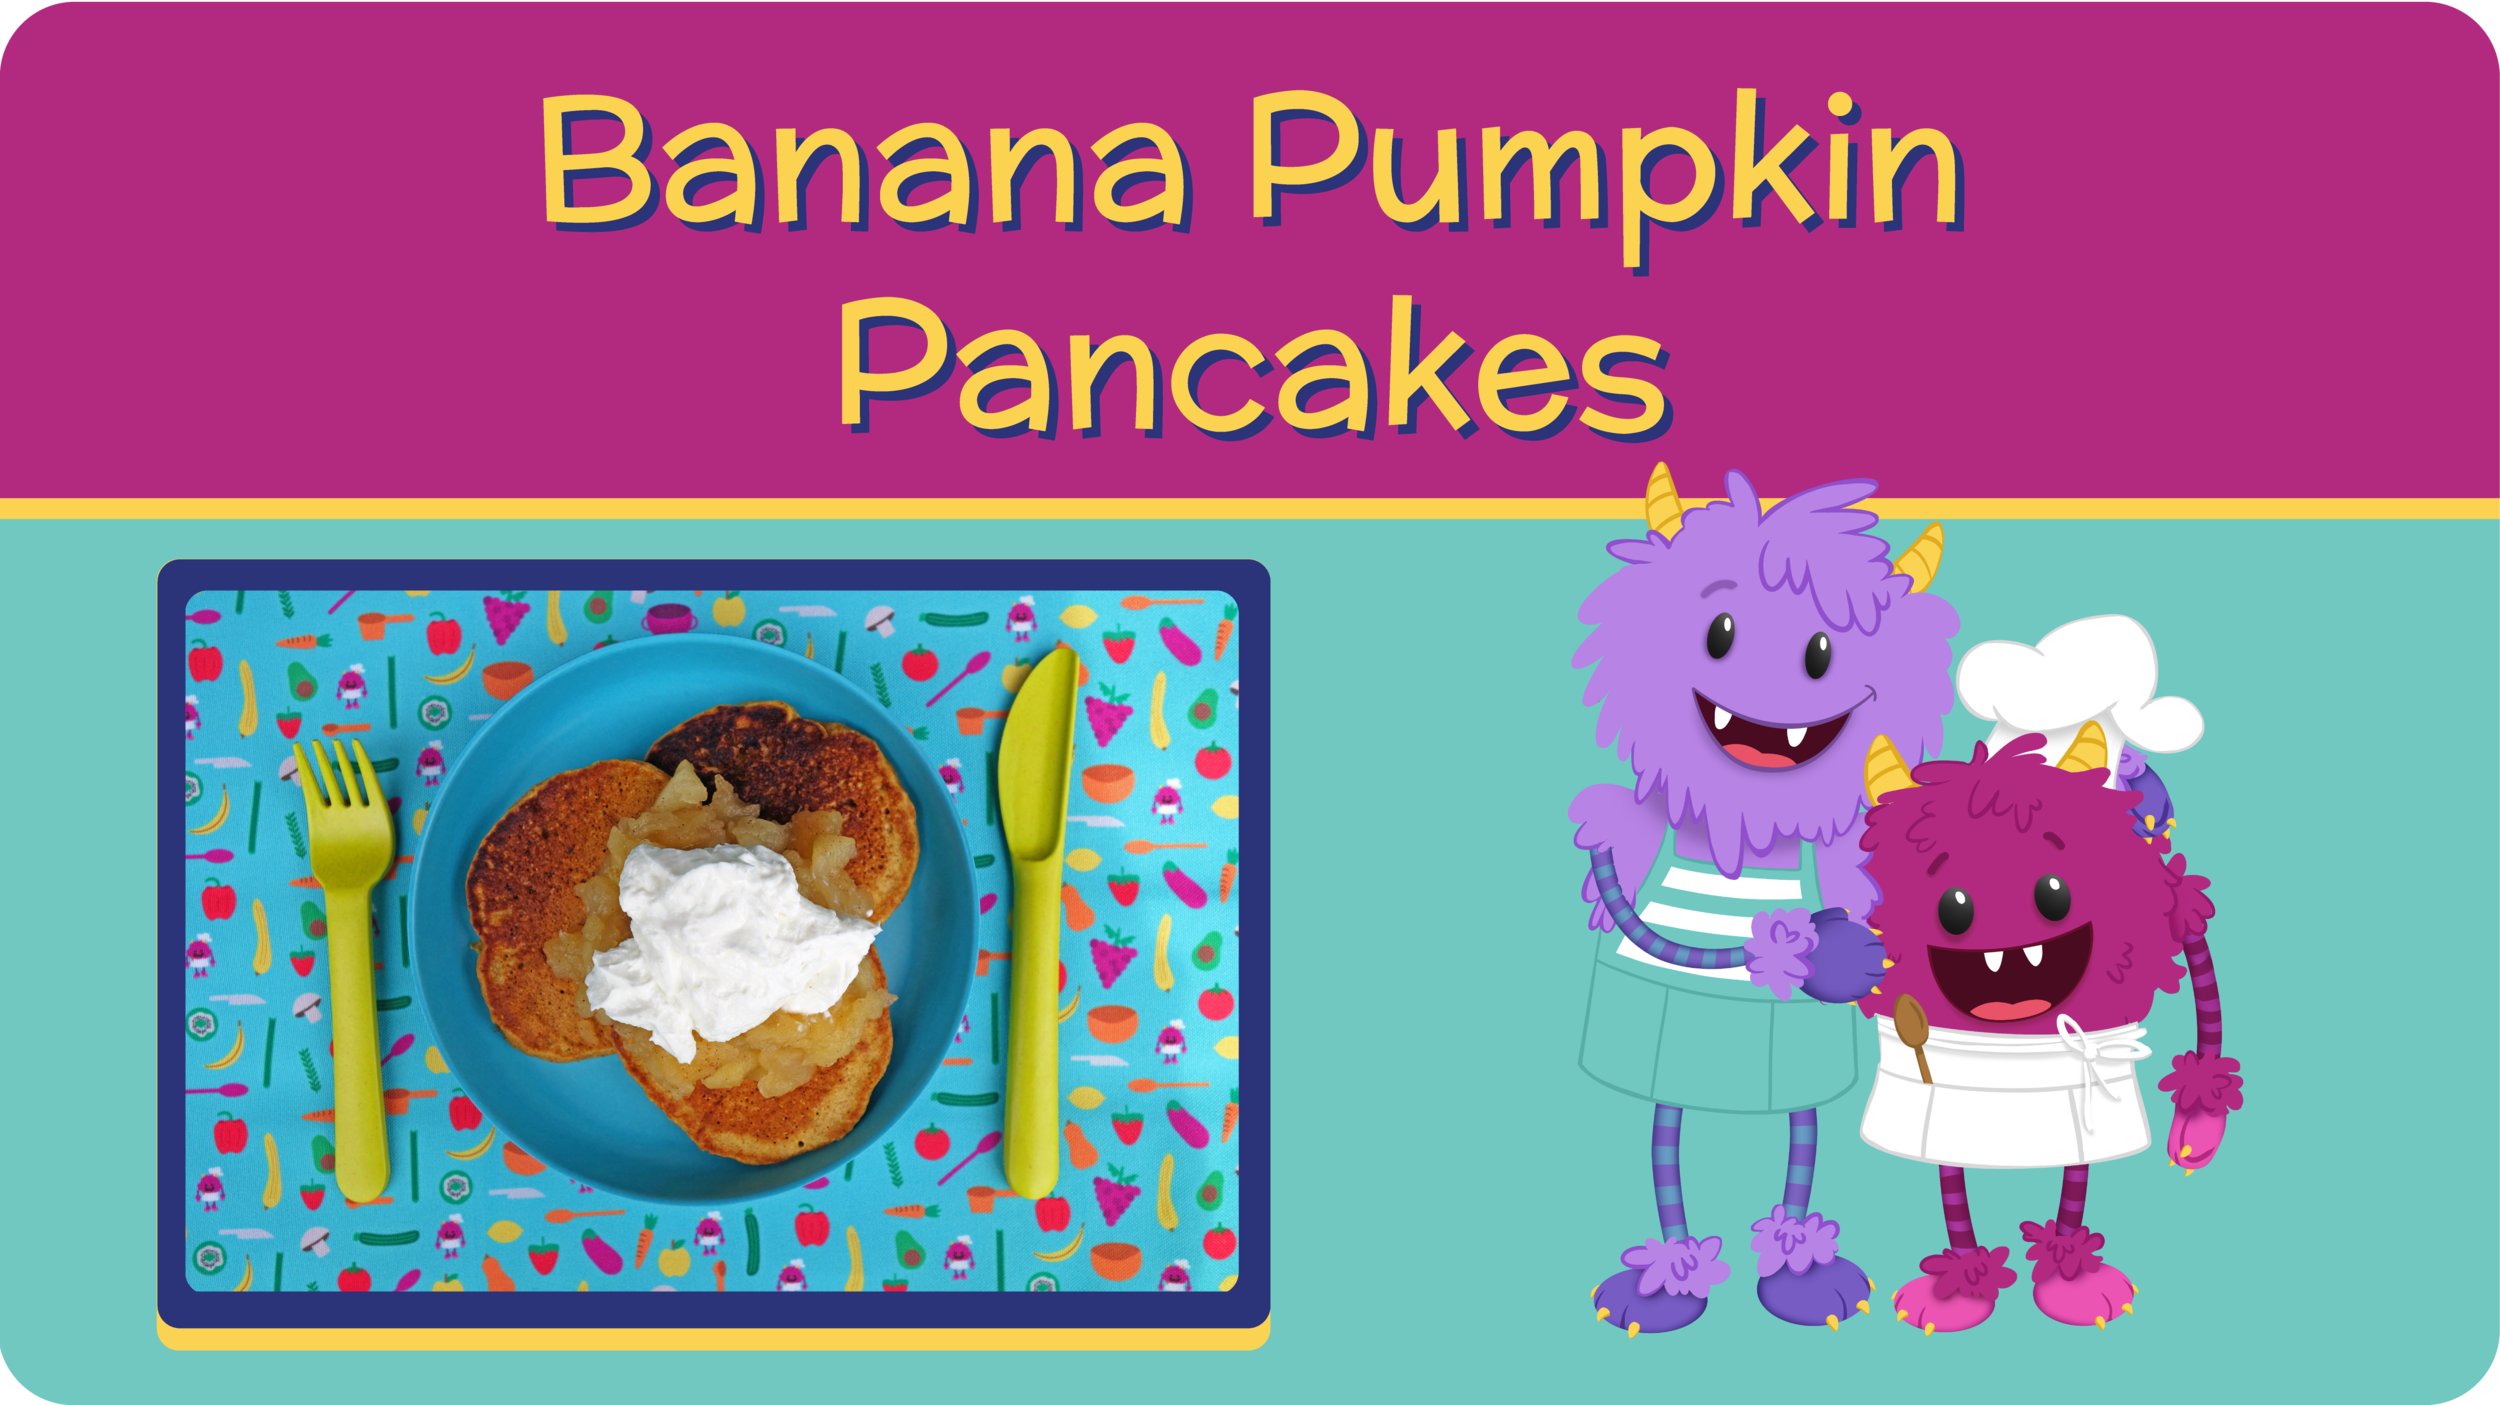 01_Banana Pumpkin Pancakes_Title Page-01.png